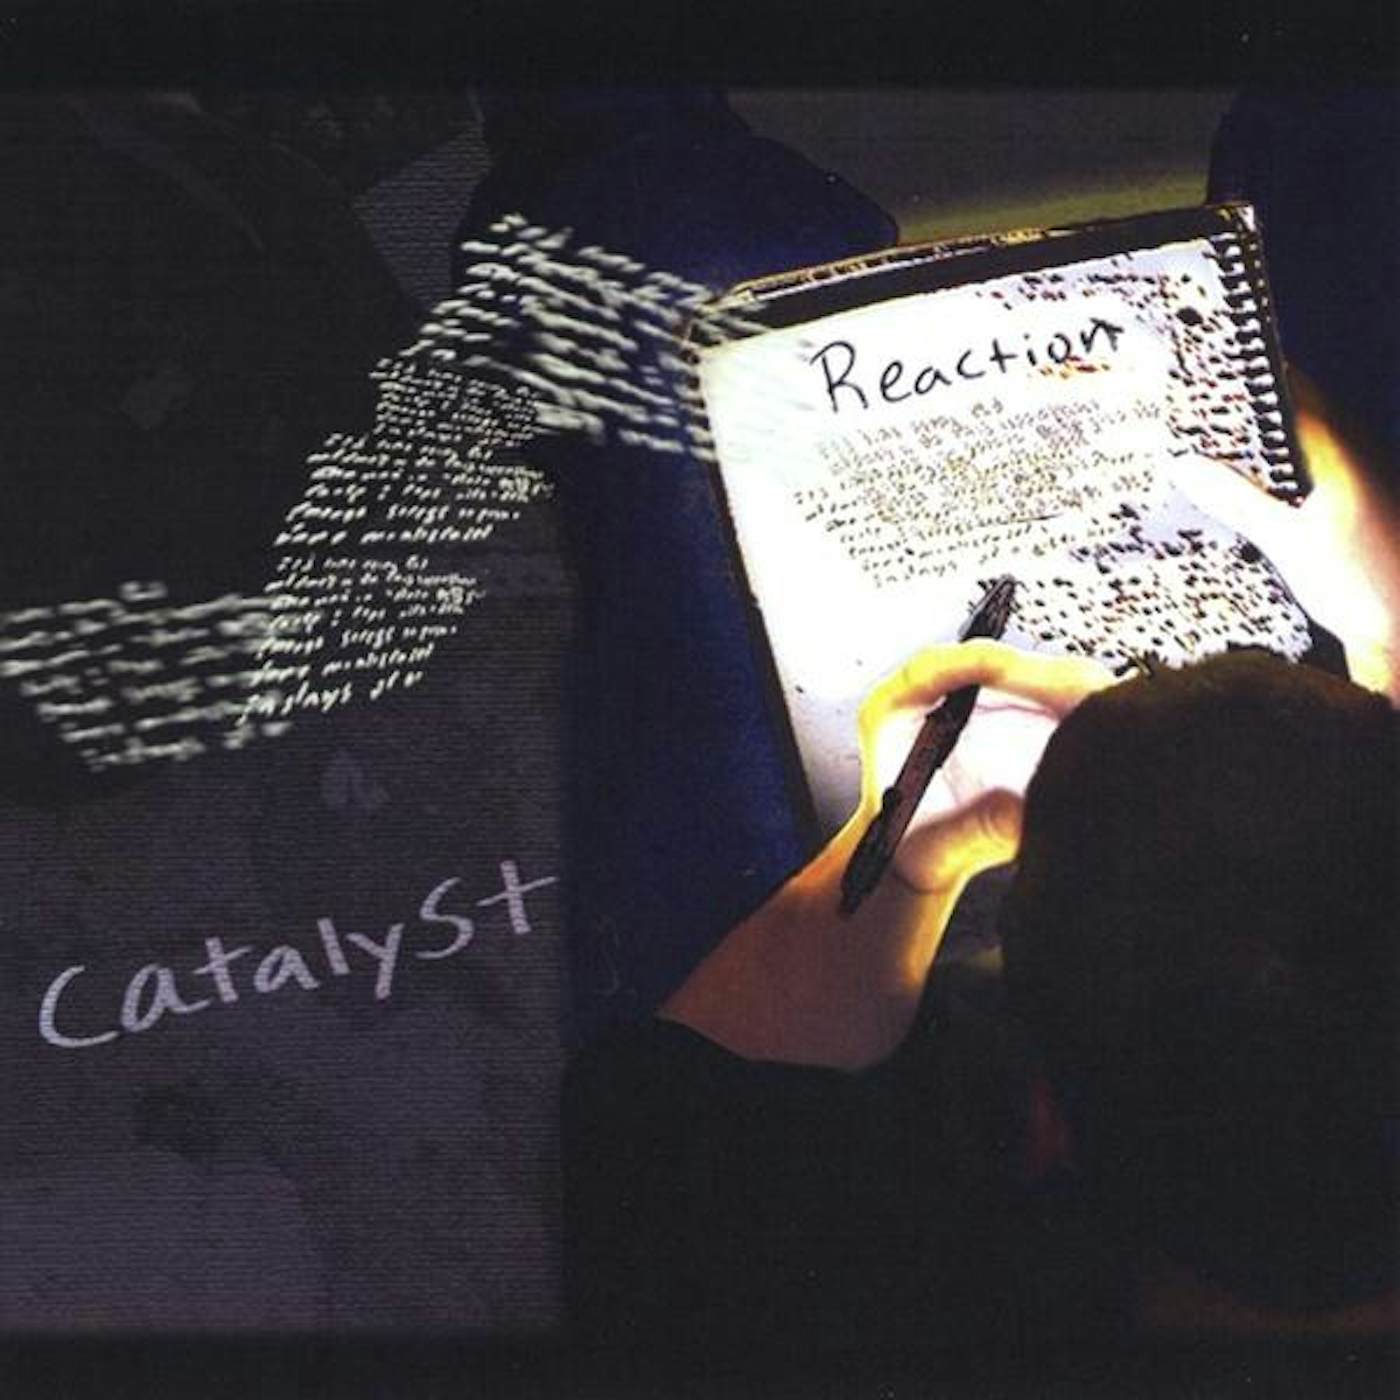 Catalyst REACTION CD